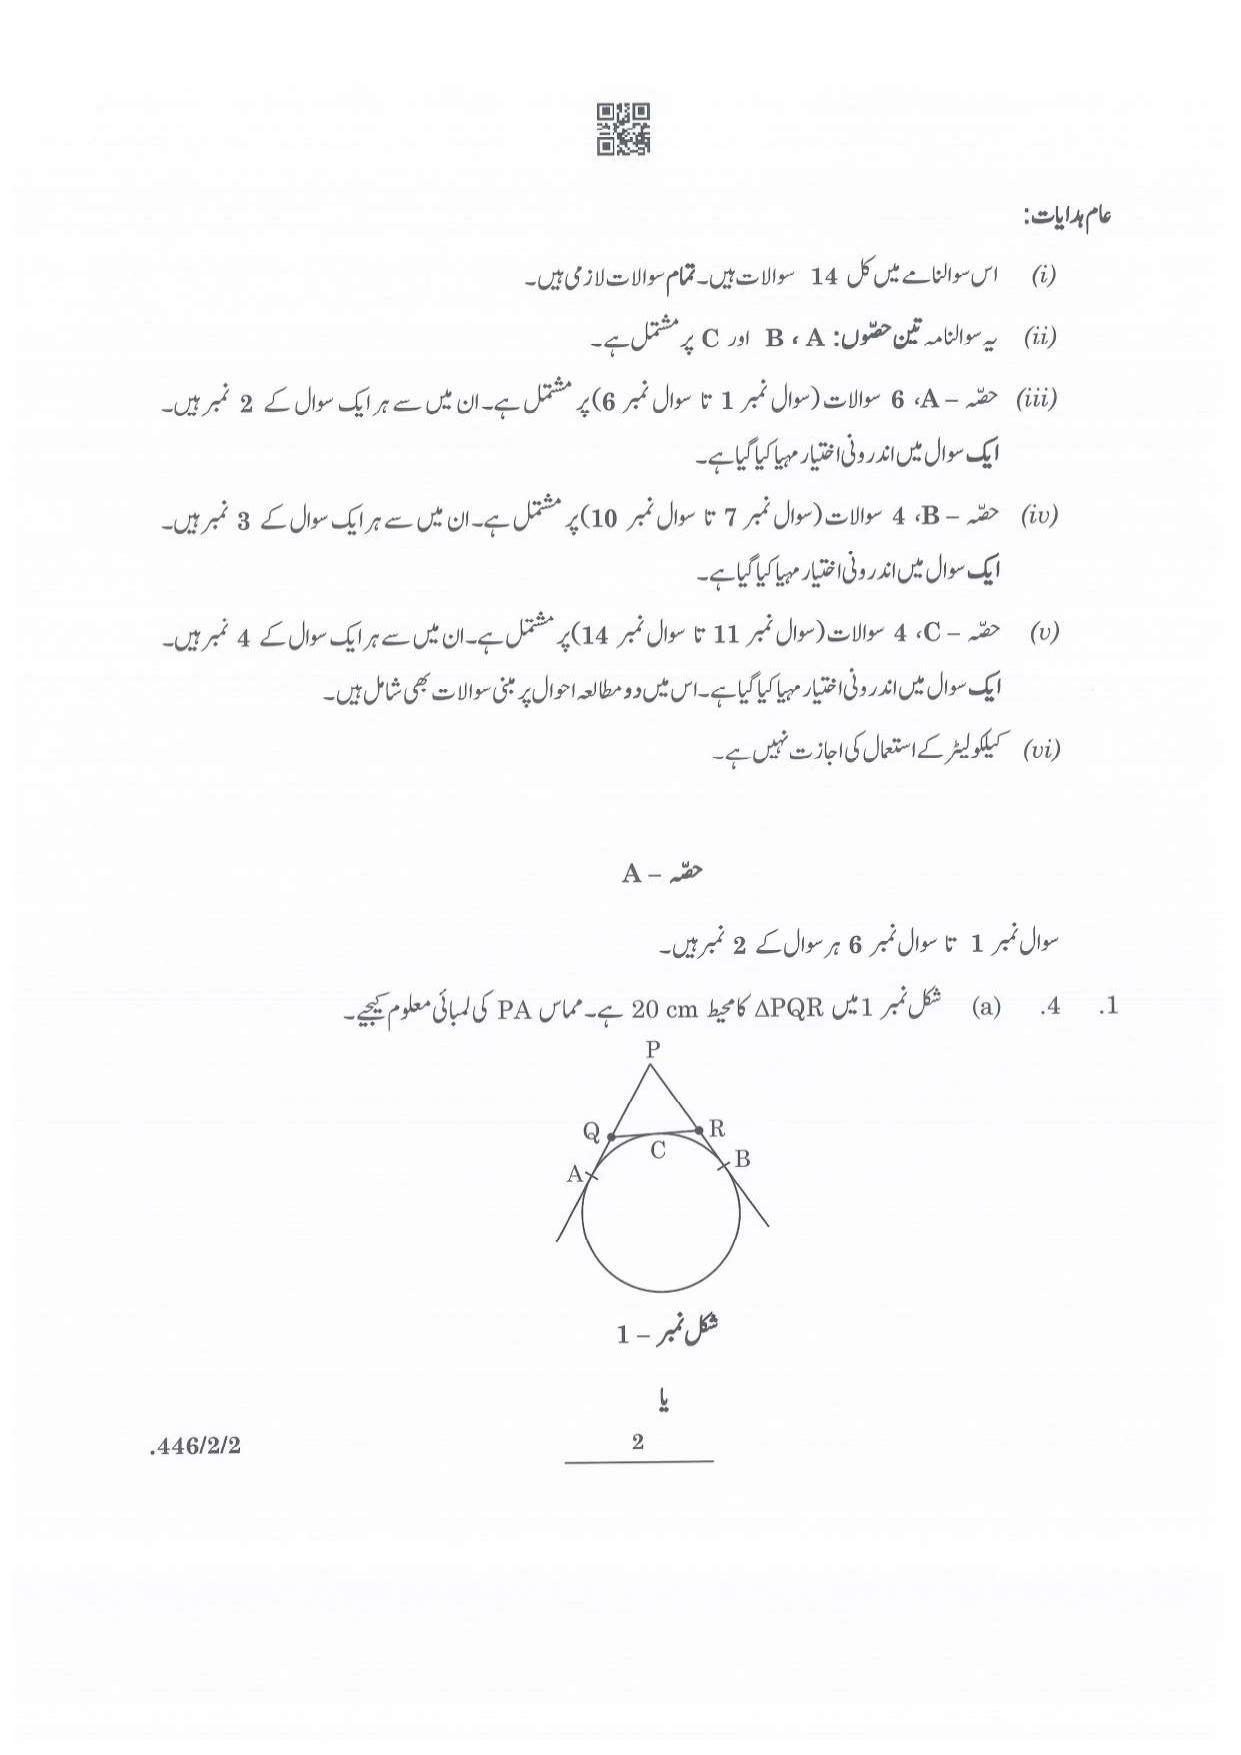 CBSE Class 10 Maths Basic - Urdu (446/2/2 - SET 2) 2022 Question Paper - Page 2